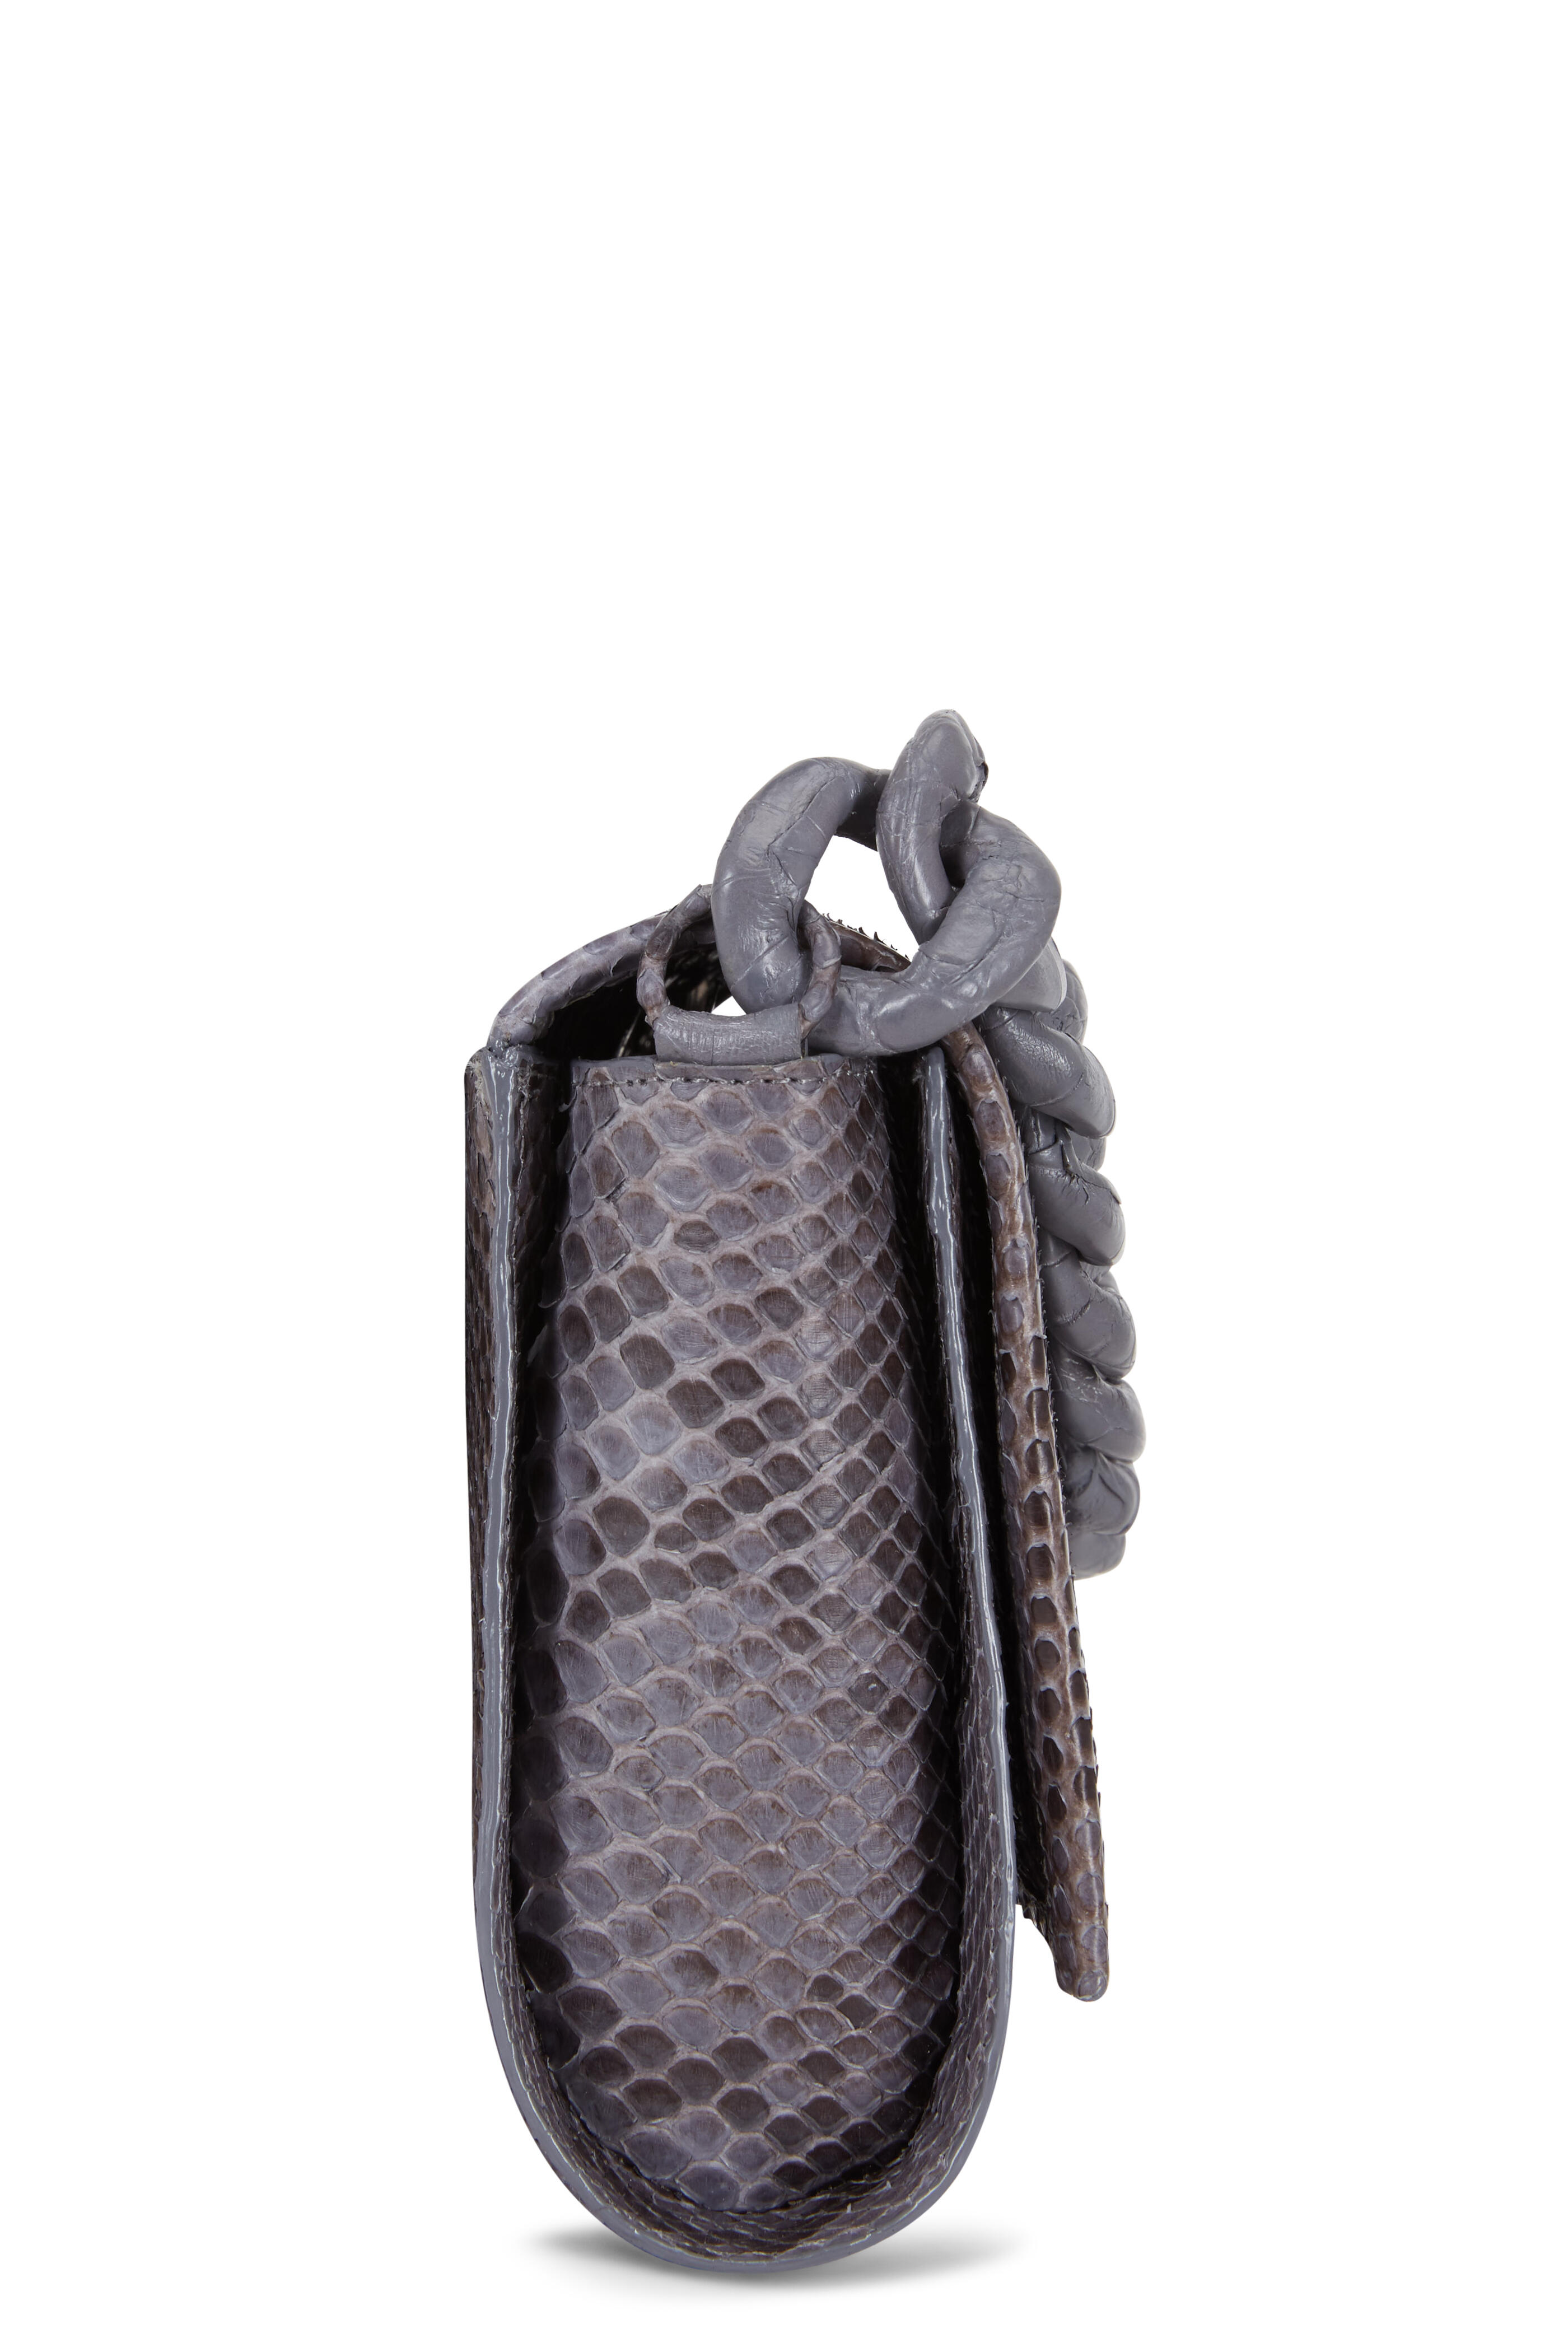 Nancy Gonzalez - Gray Python & Crocodile Chain Strap Small Bag